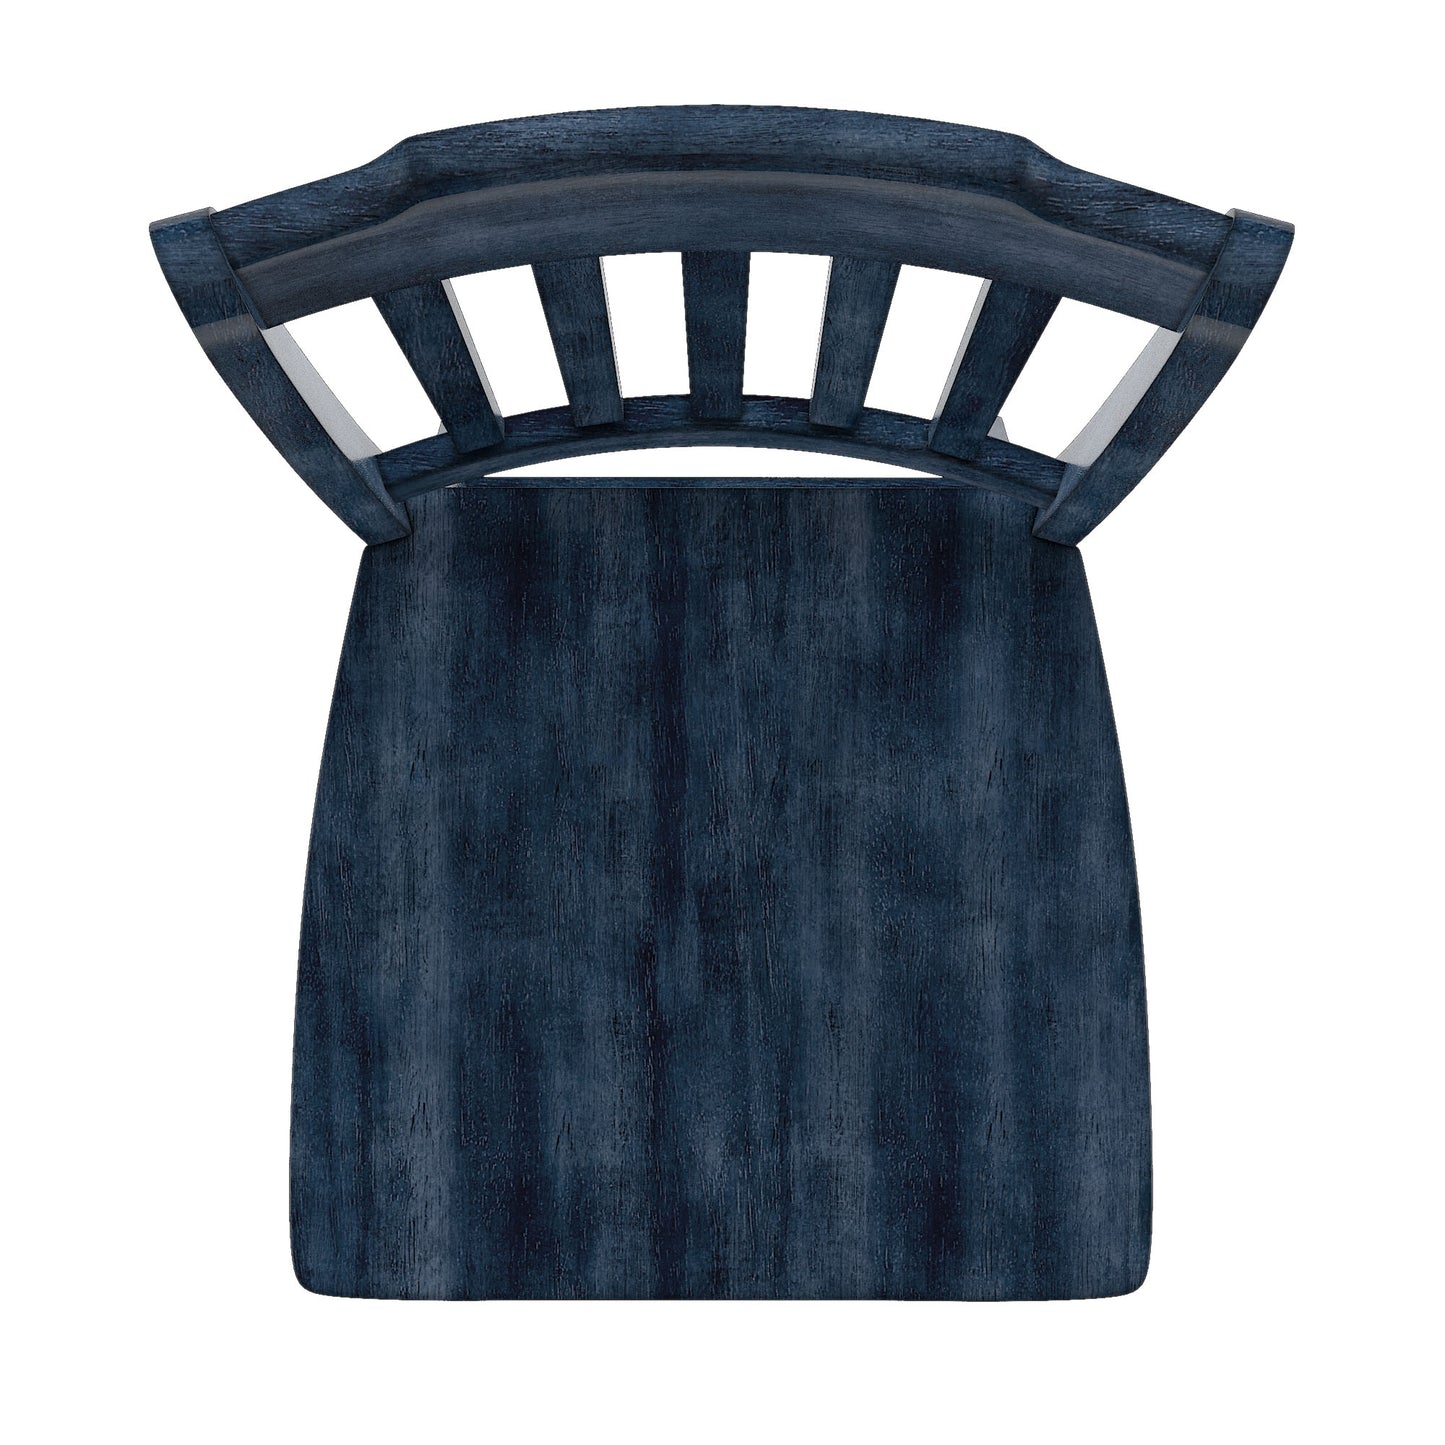 Slat Back Wood Counter Height Chairs (Set of 2) - Antique Dark Denim Finish